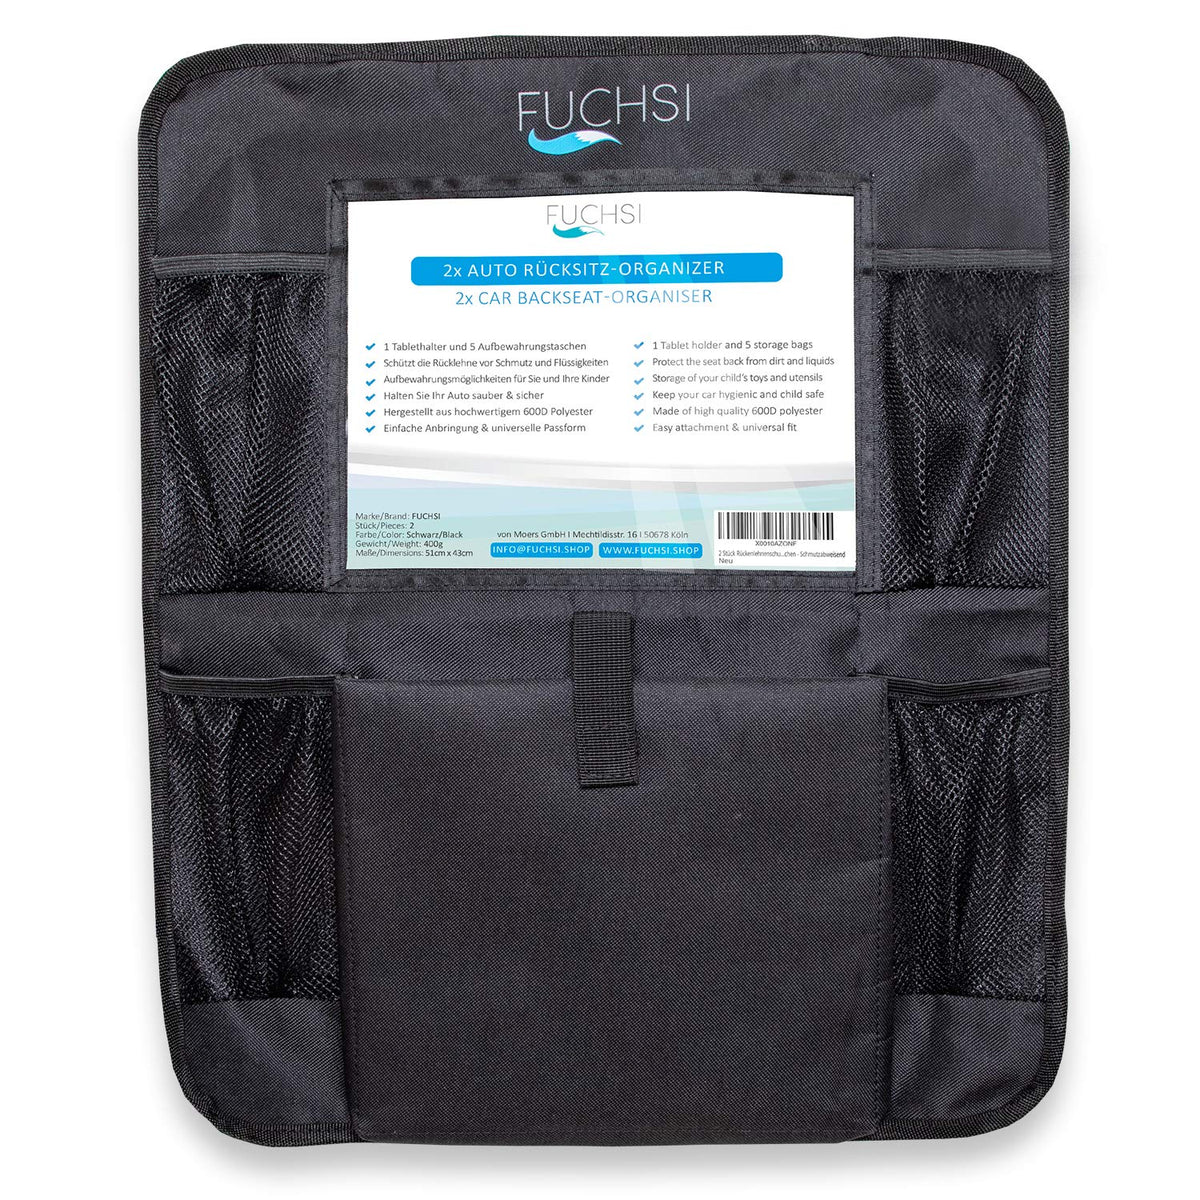 2 STÜCK - FUCHSI Rücksitz Organizer für Kinder mit iPad- / Tablet